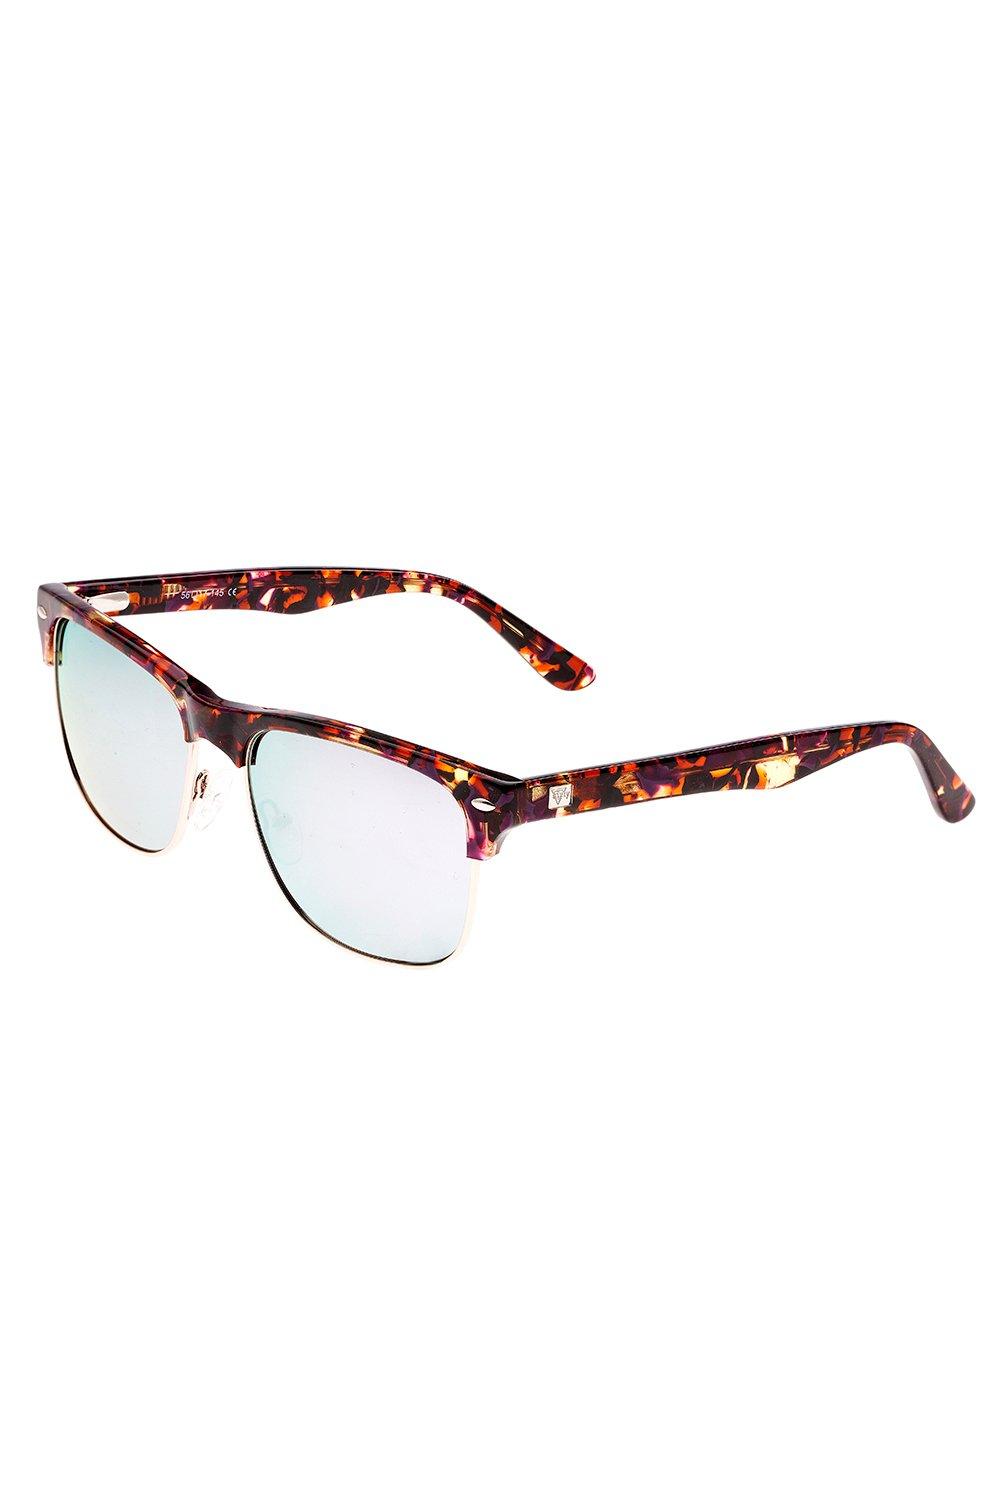 Waipio Polarized Sunglasses